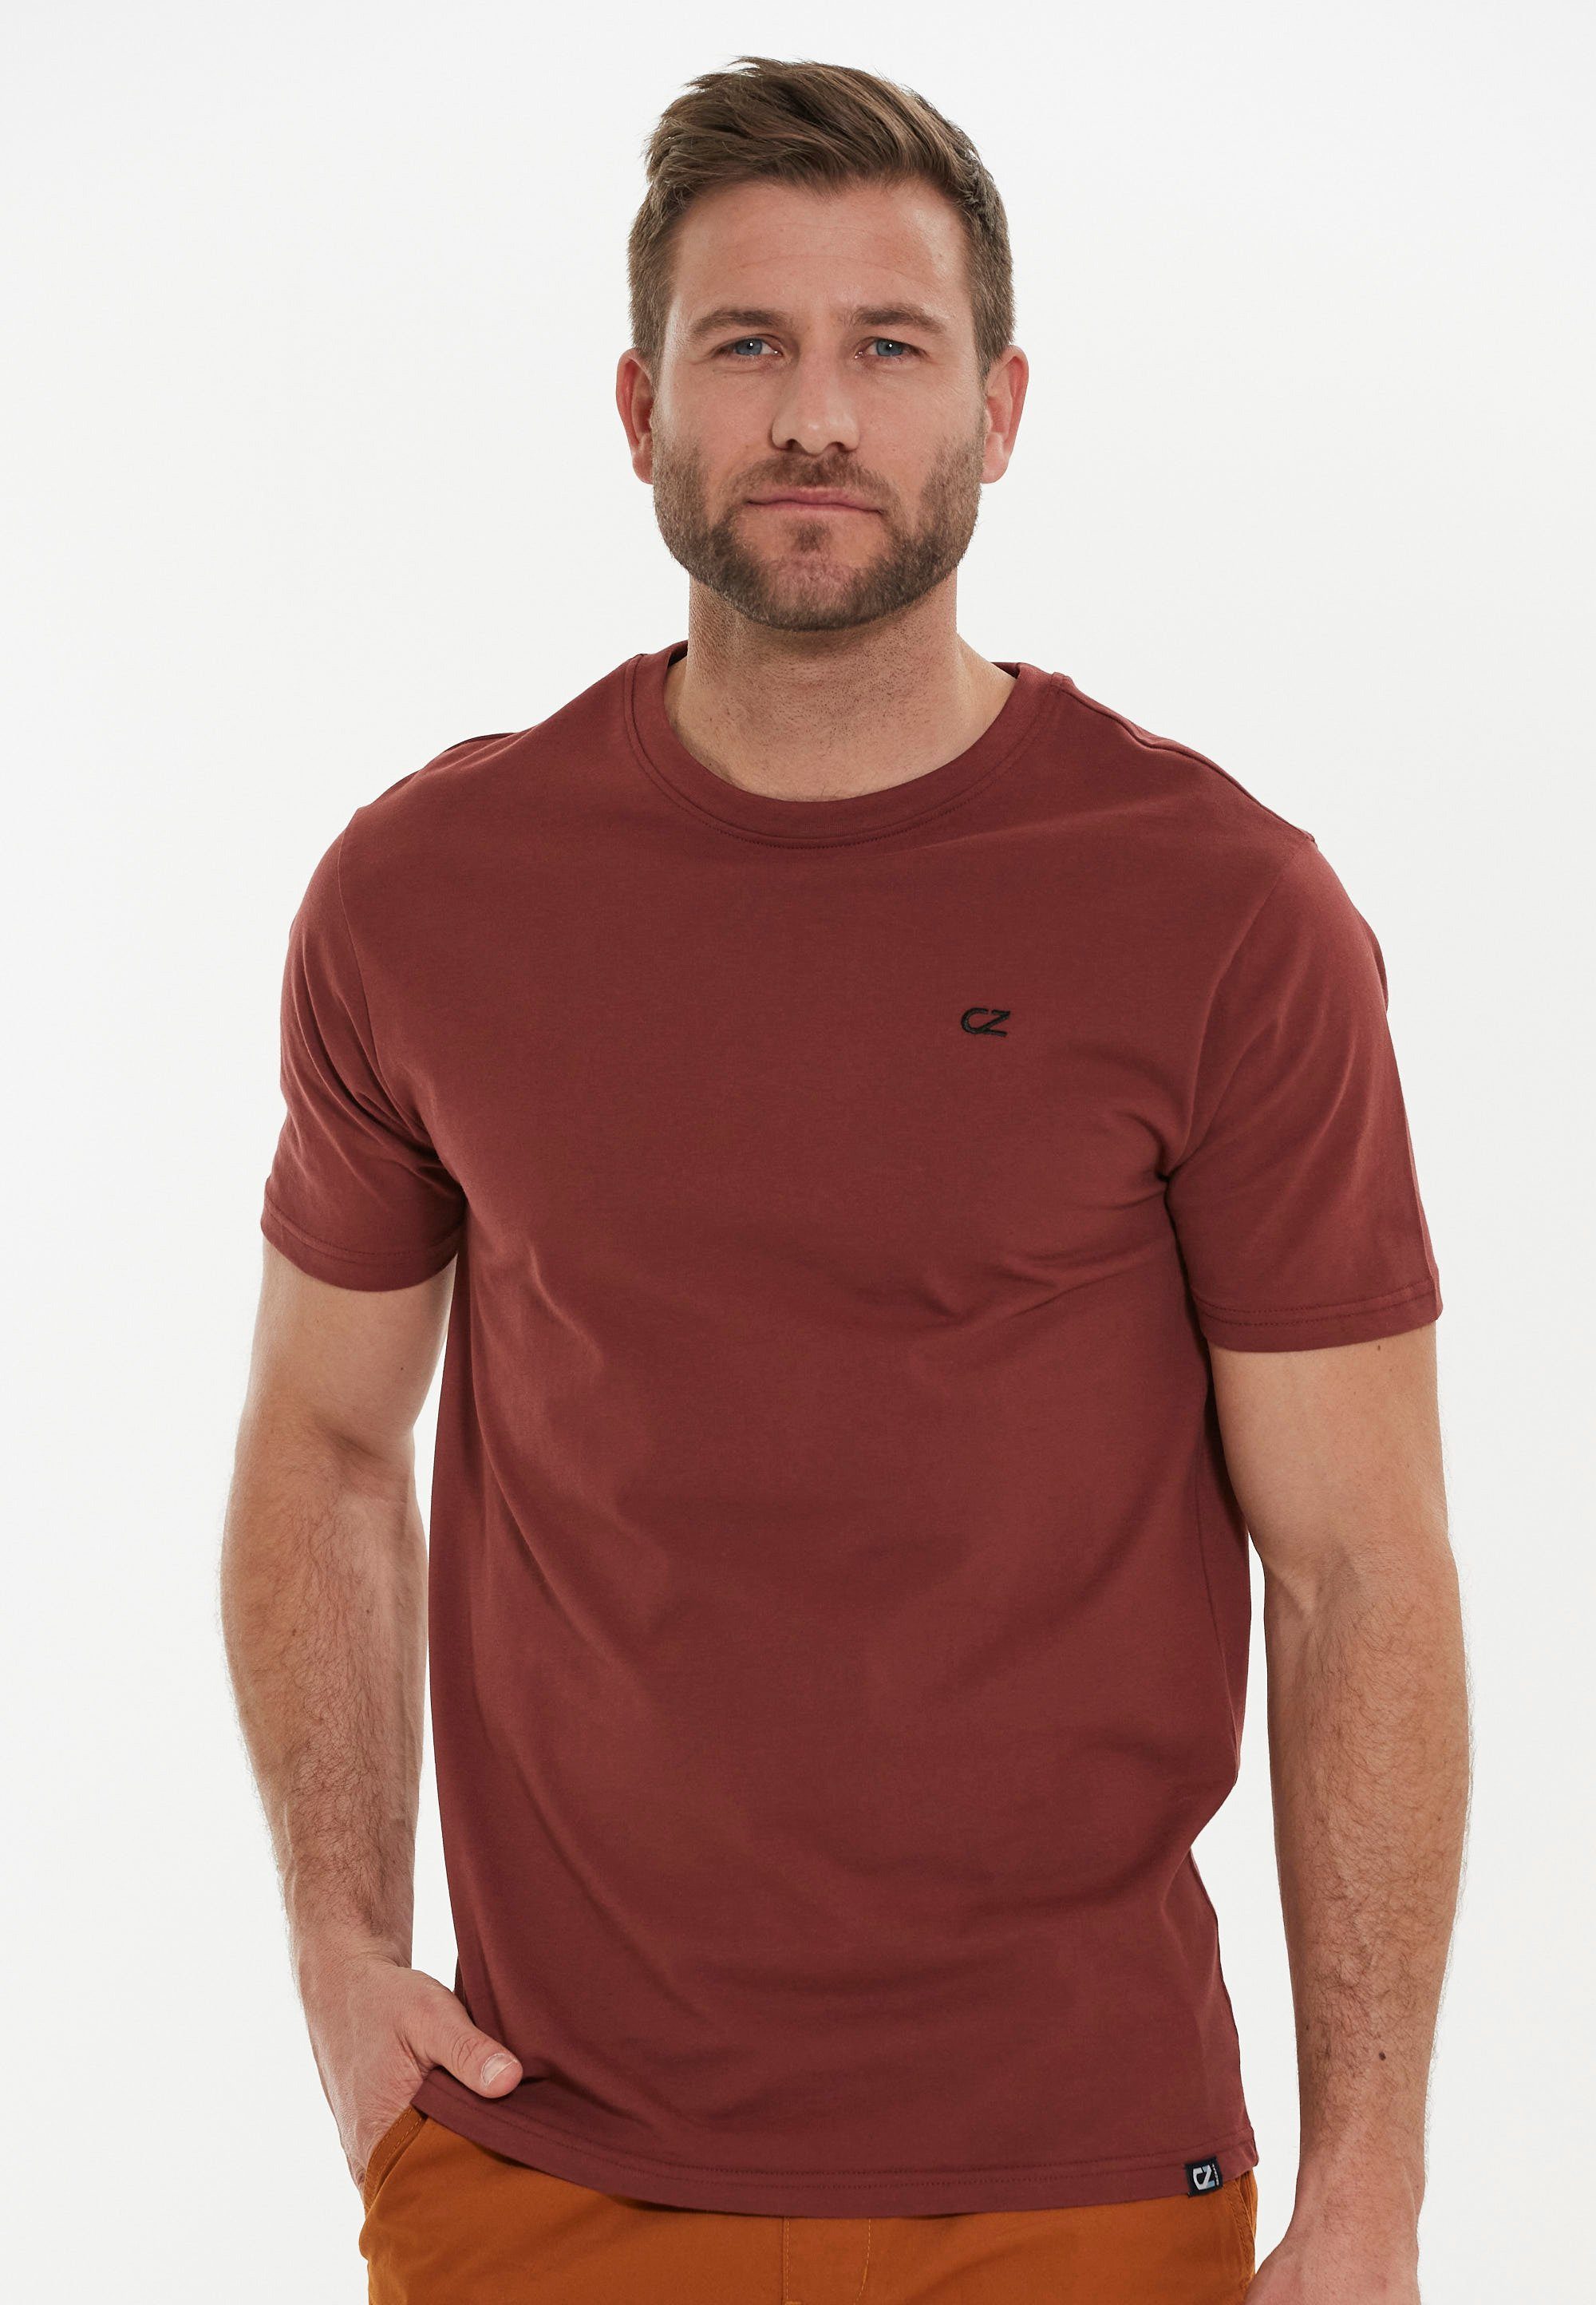 karamell CRUZ Baumwolle Highmore aus reiner T-Shirt